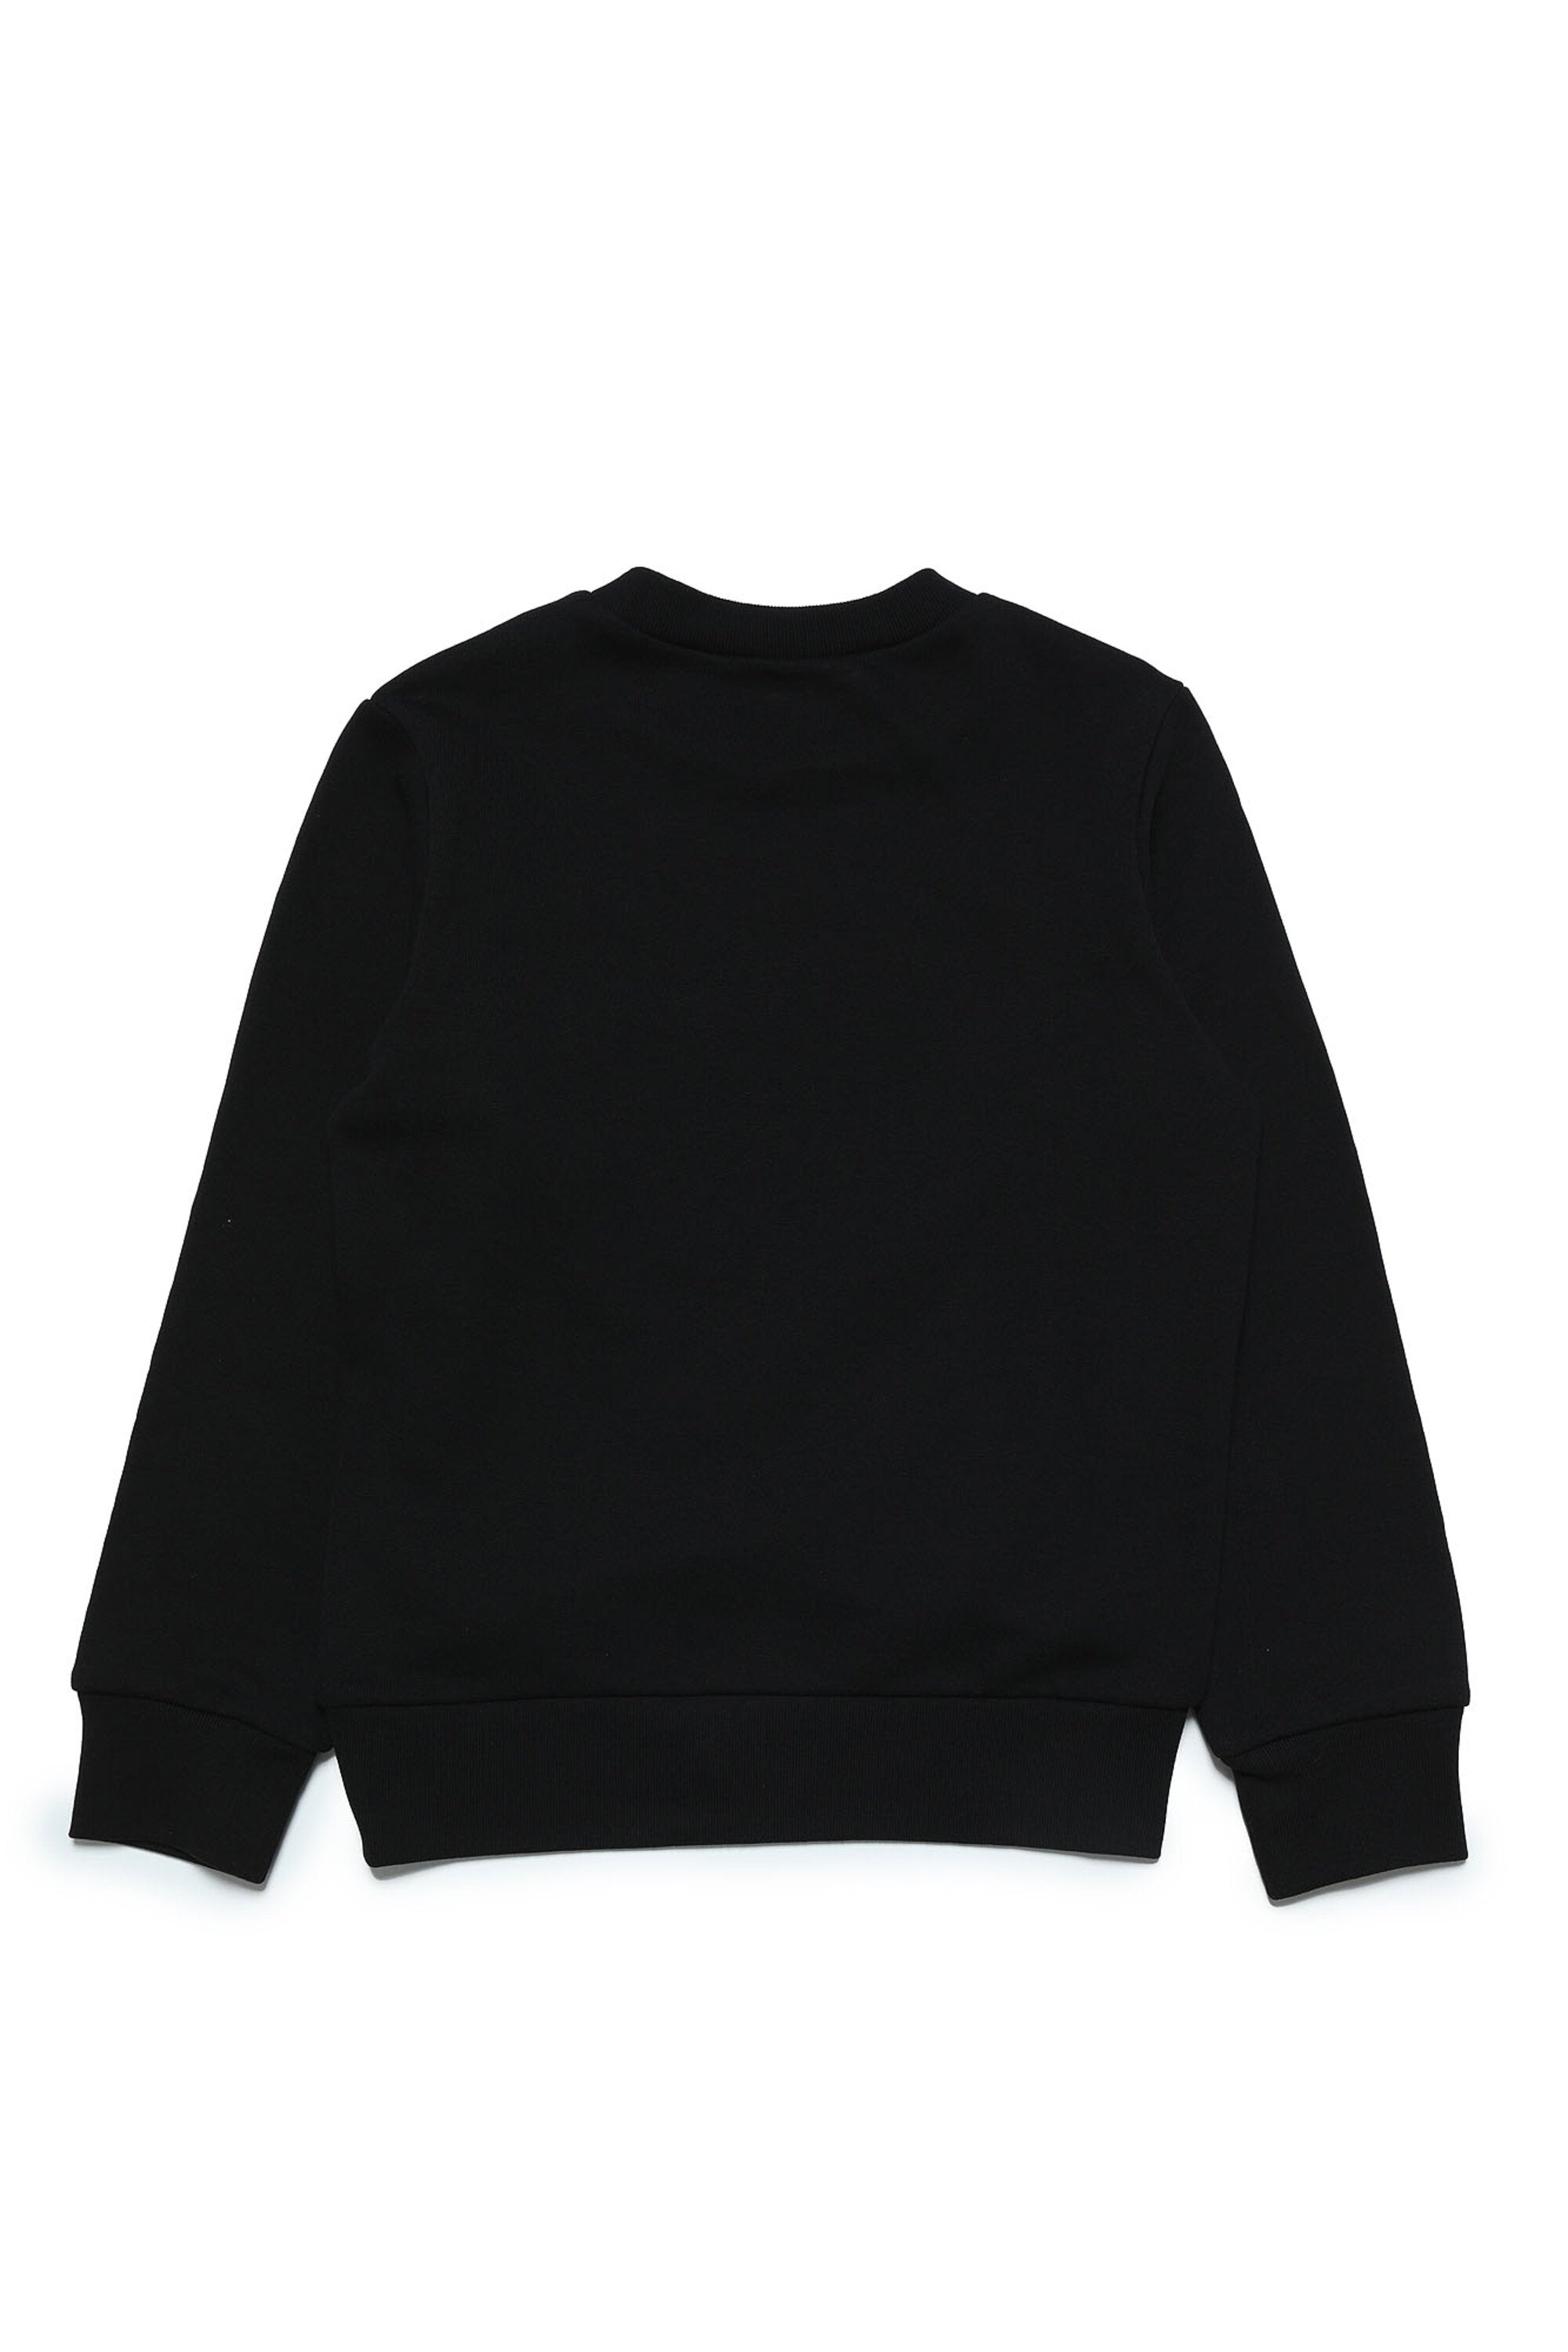 Black cotton crew-neck sweatshirt with logo